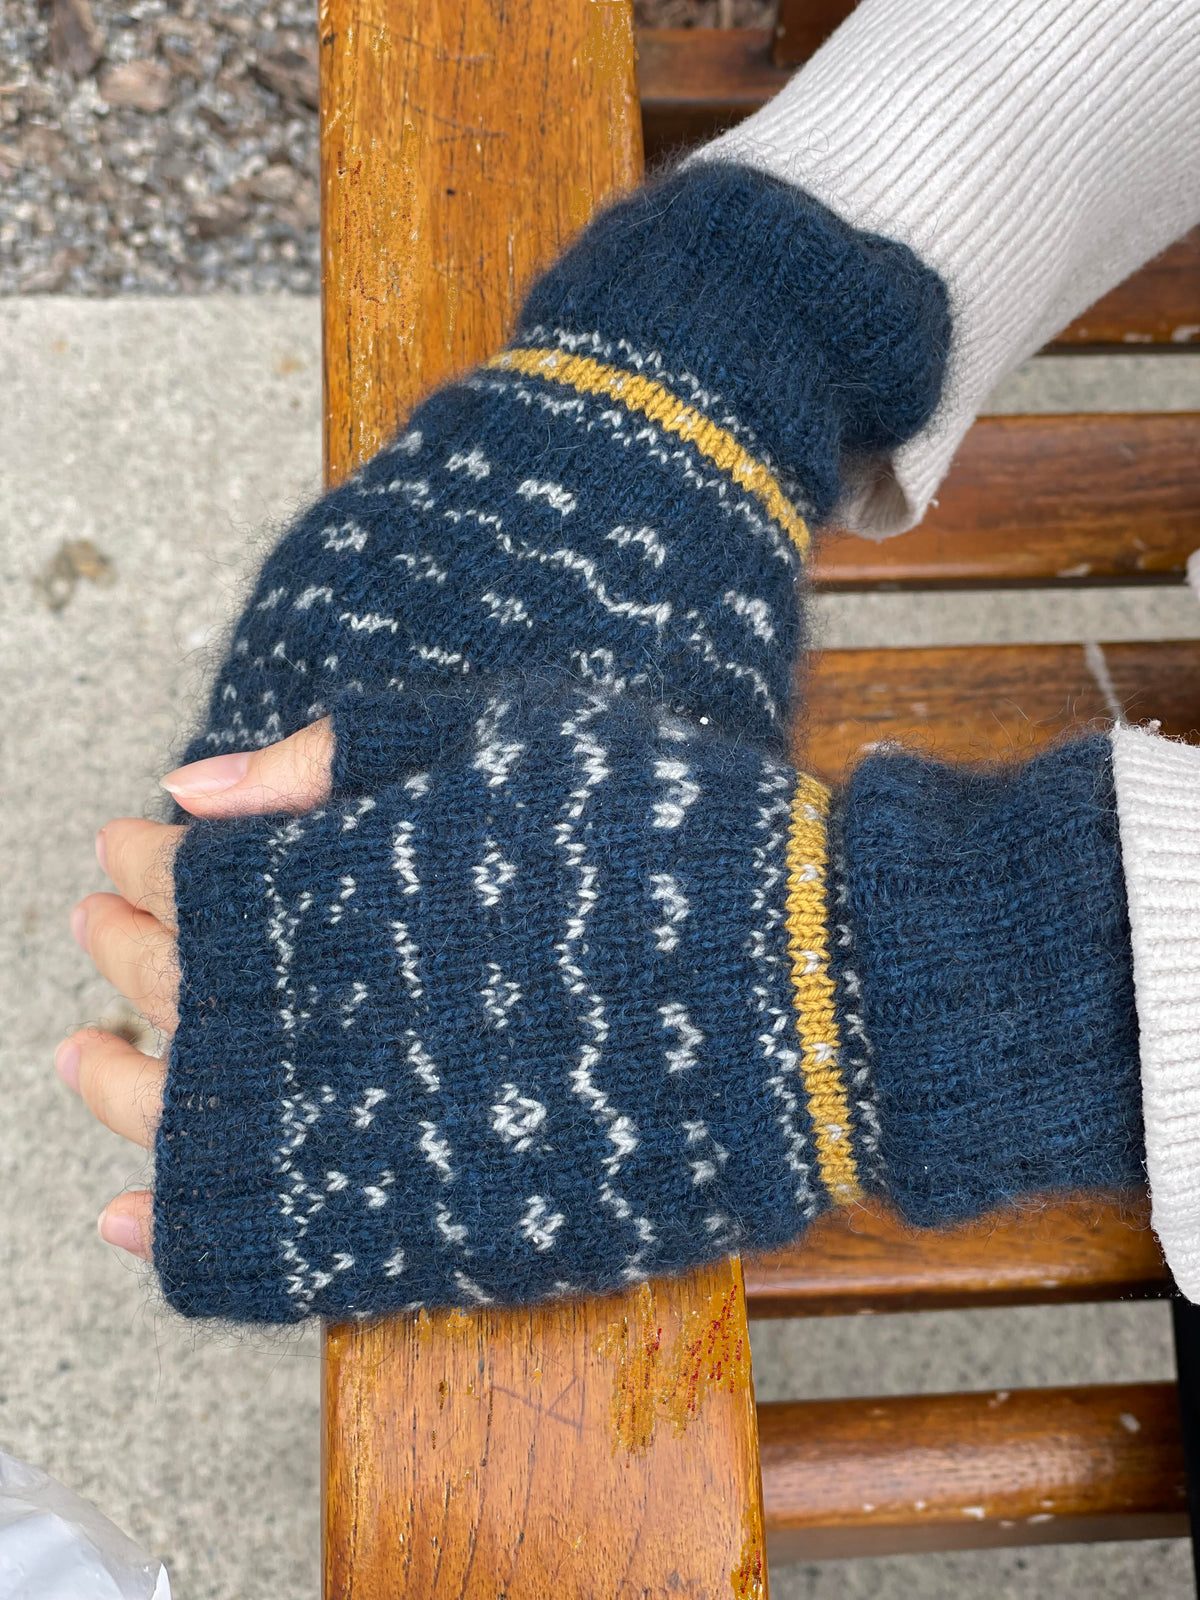 Fingerless Leather Gloves, XX Large - Brush Creek Wool Works